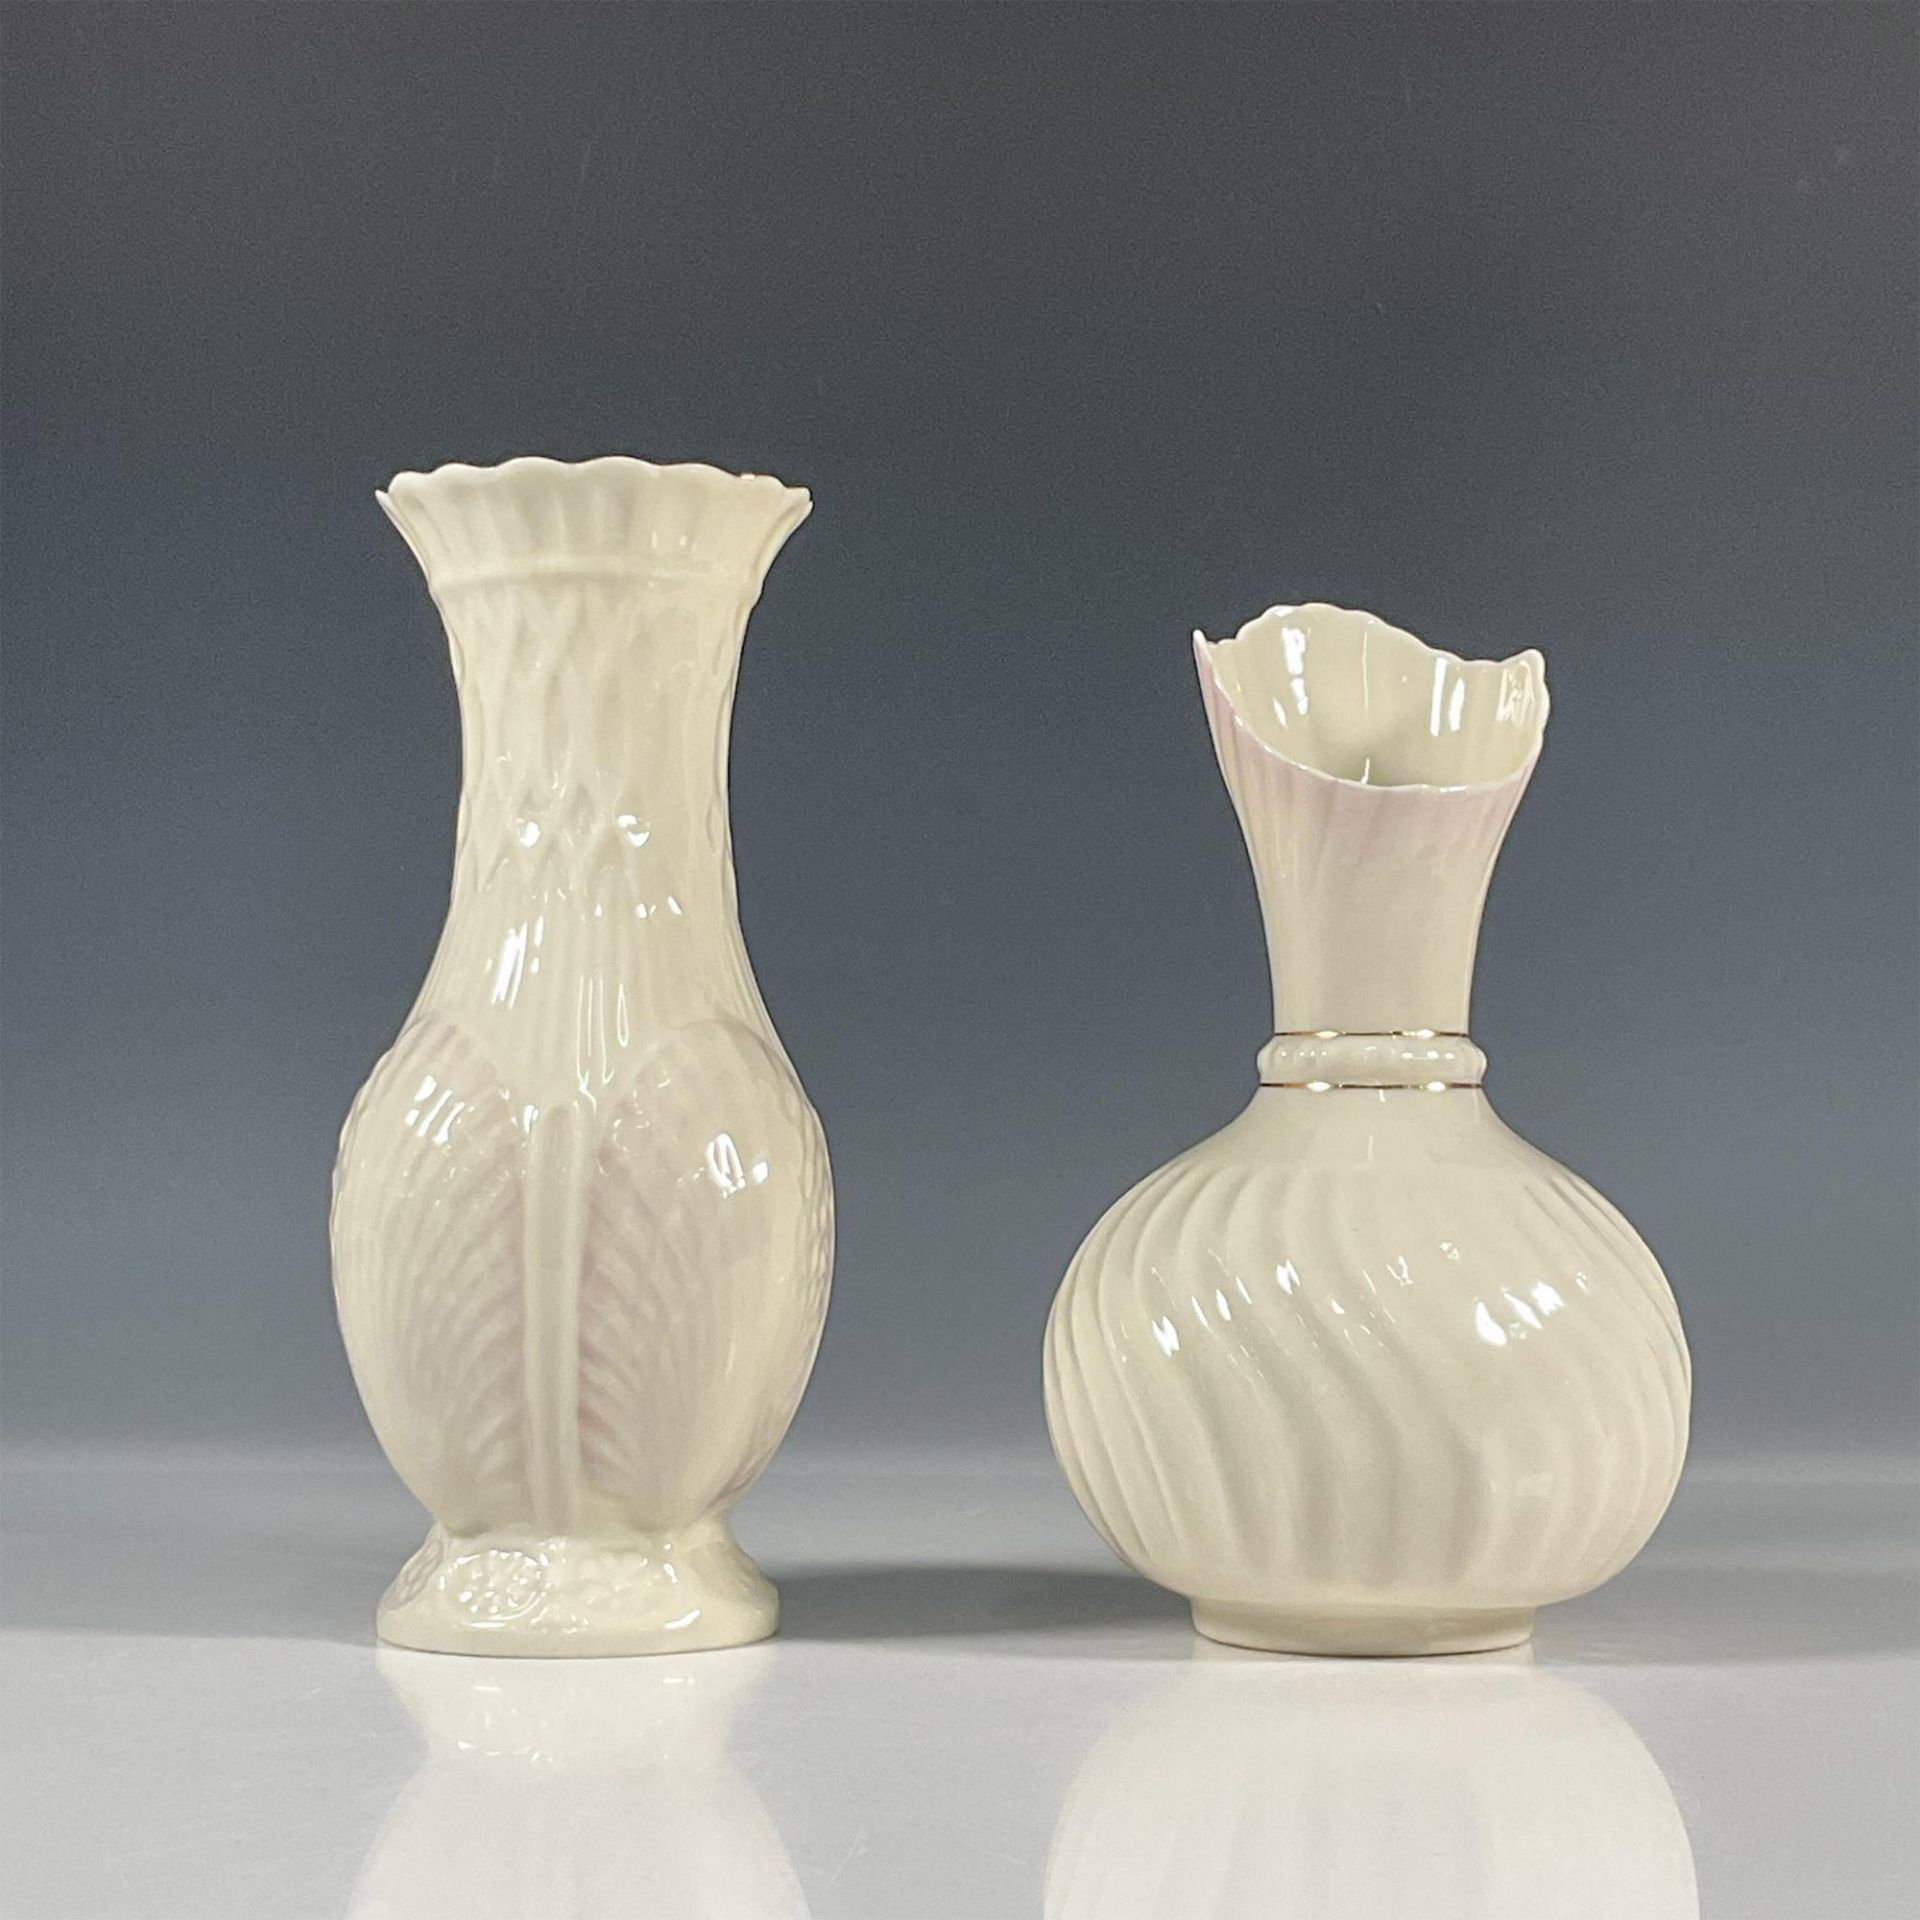 2pc Belleek Pottery Porcelain Vases - Image 2 of 4